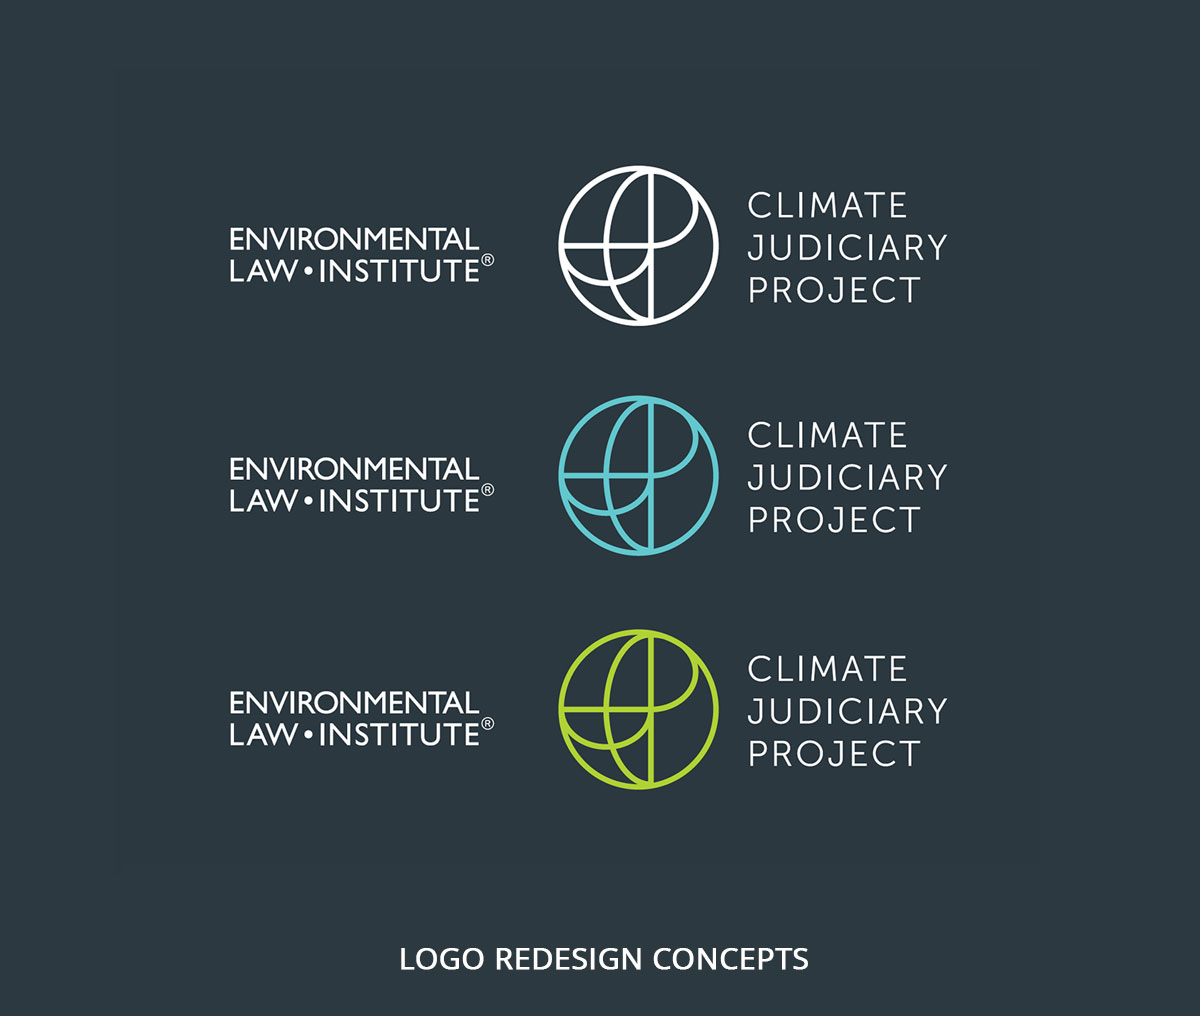 Project Logo Concepts